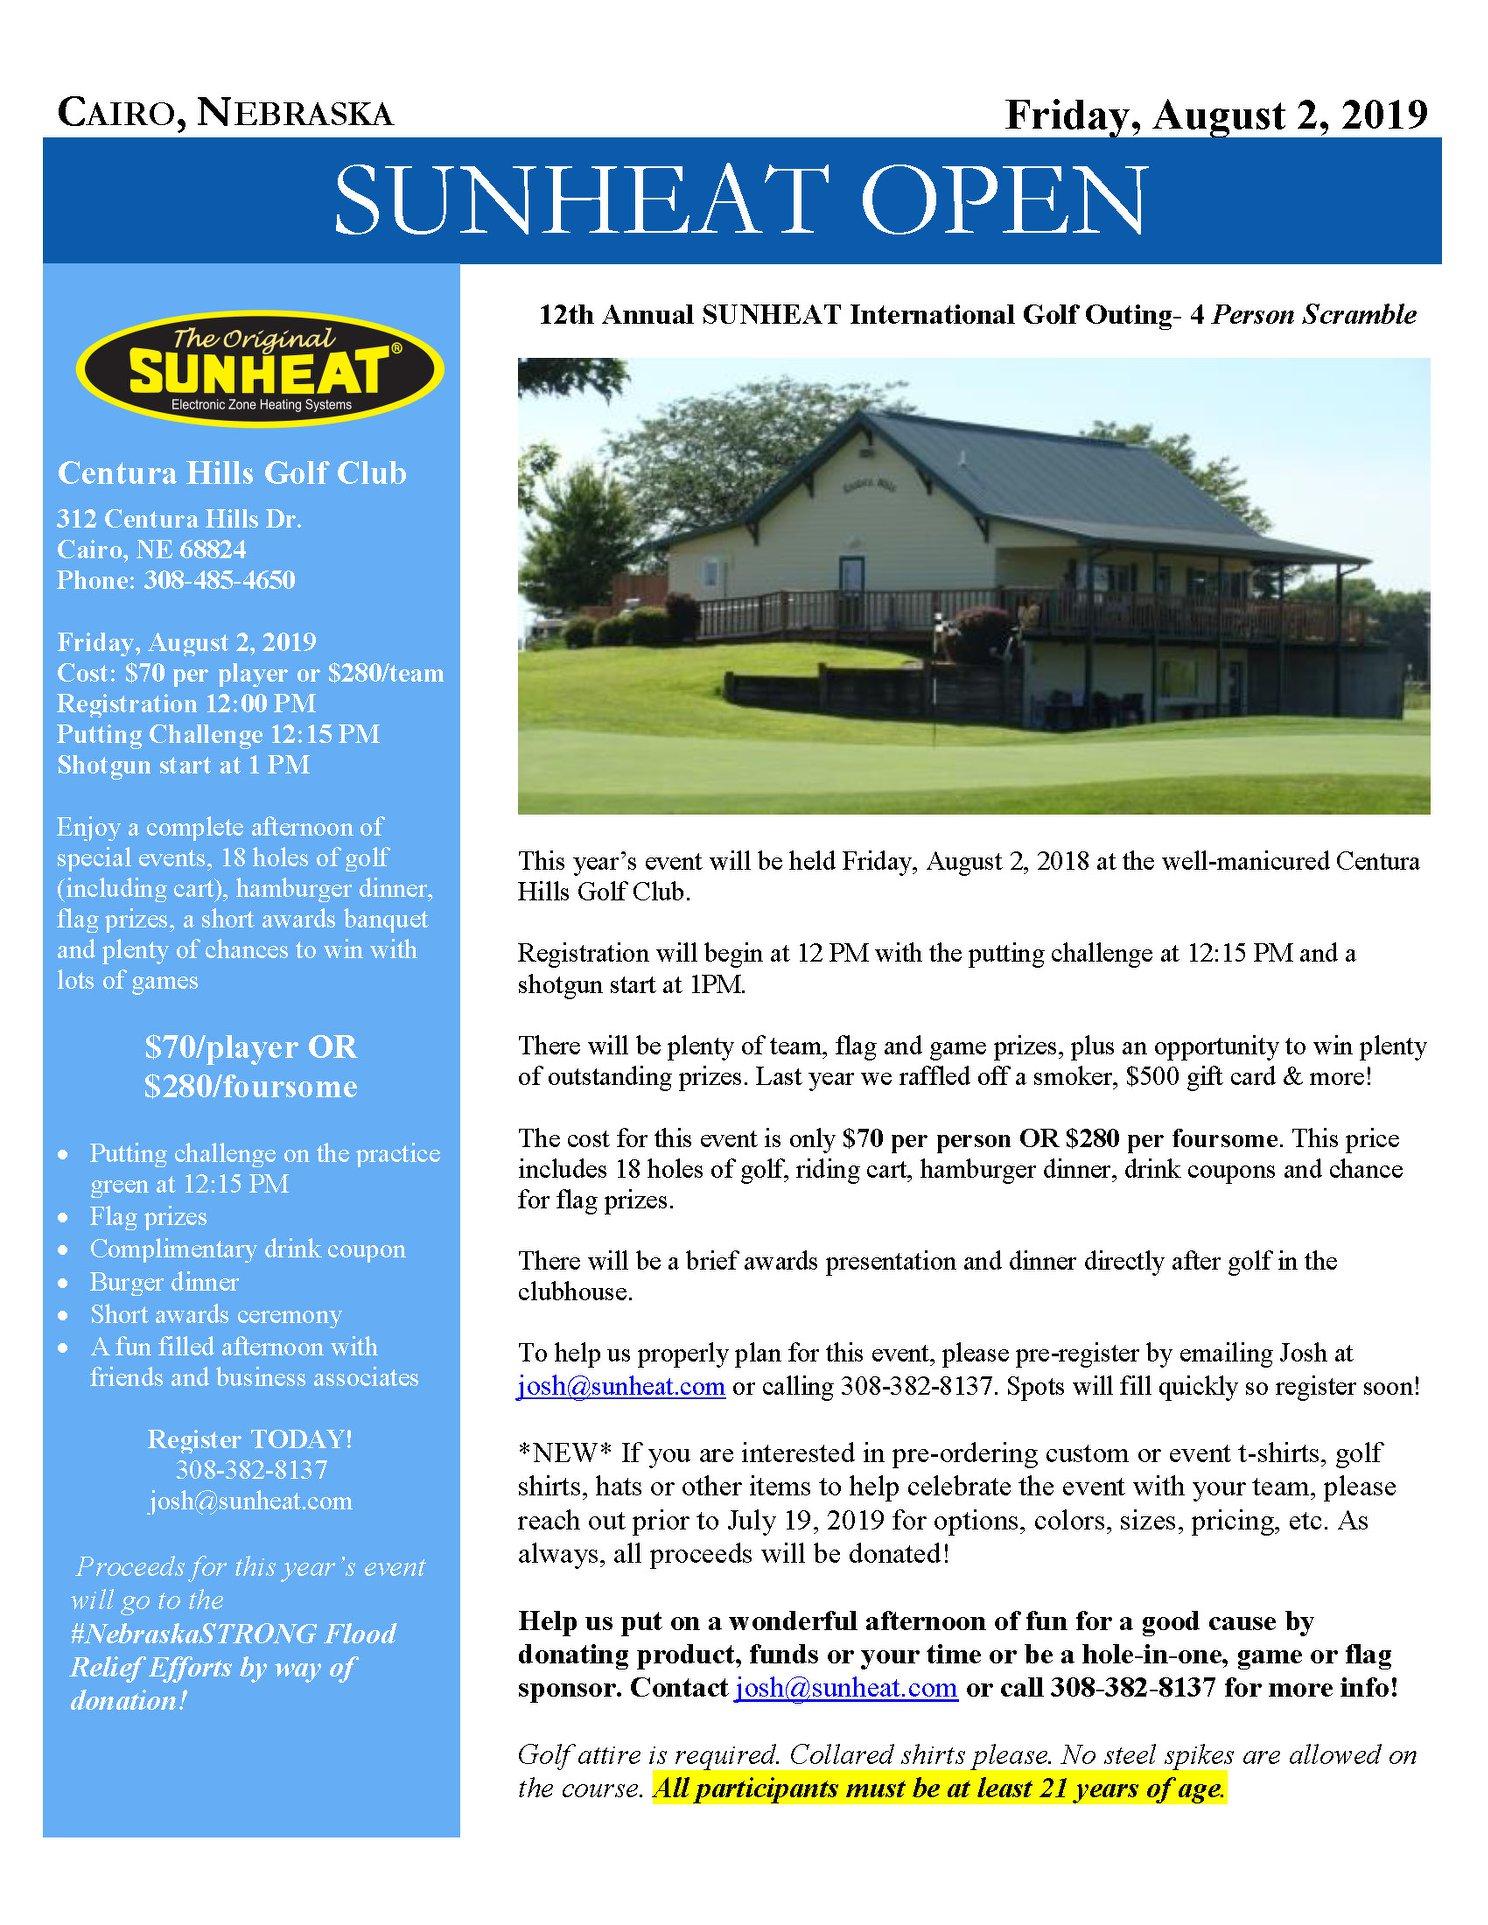 12th Annual SUNHEAT Open Golf Tournament